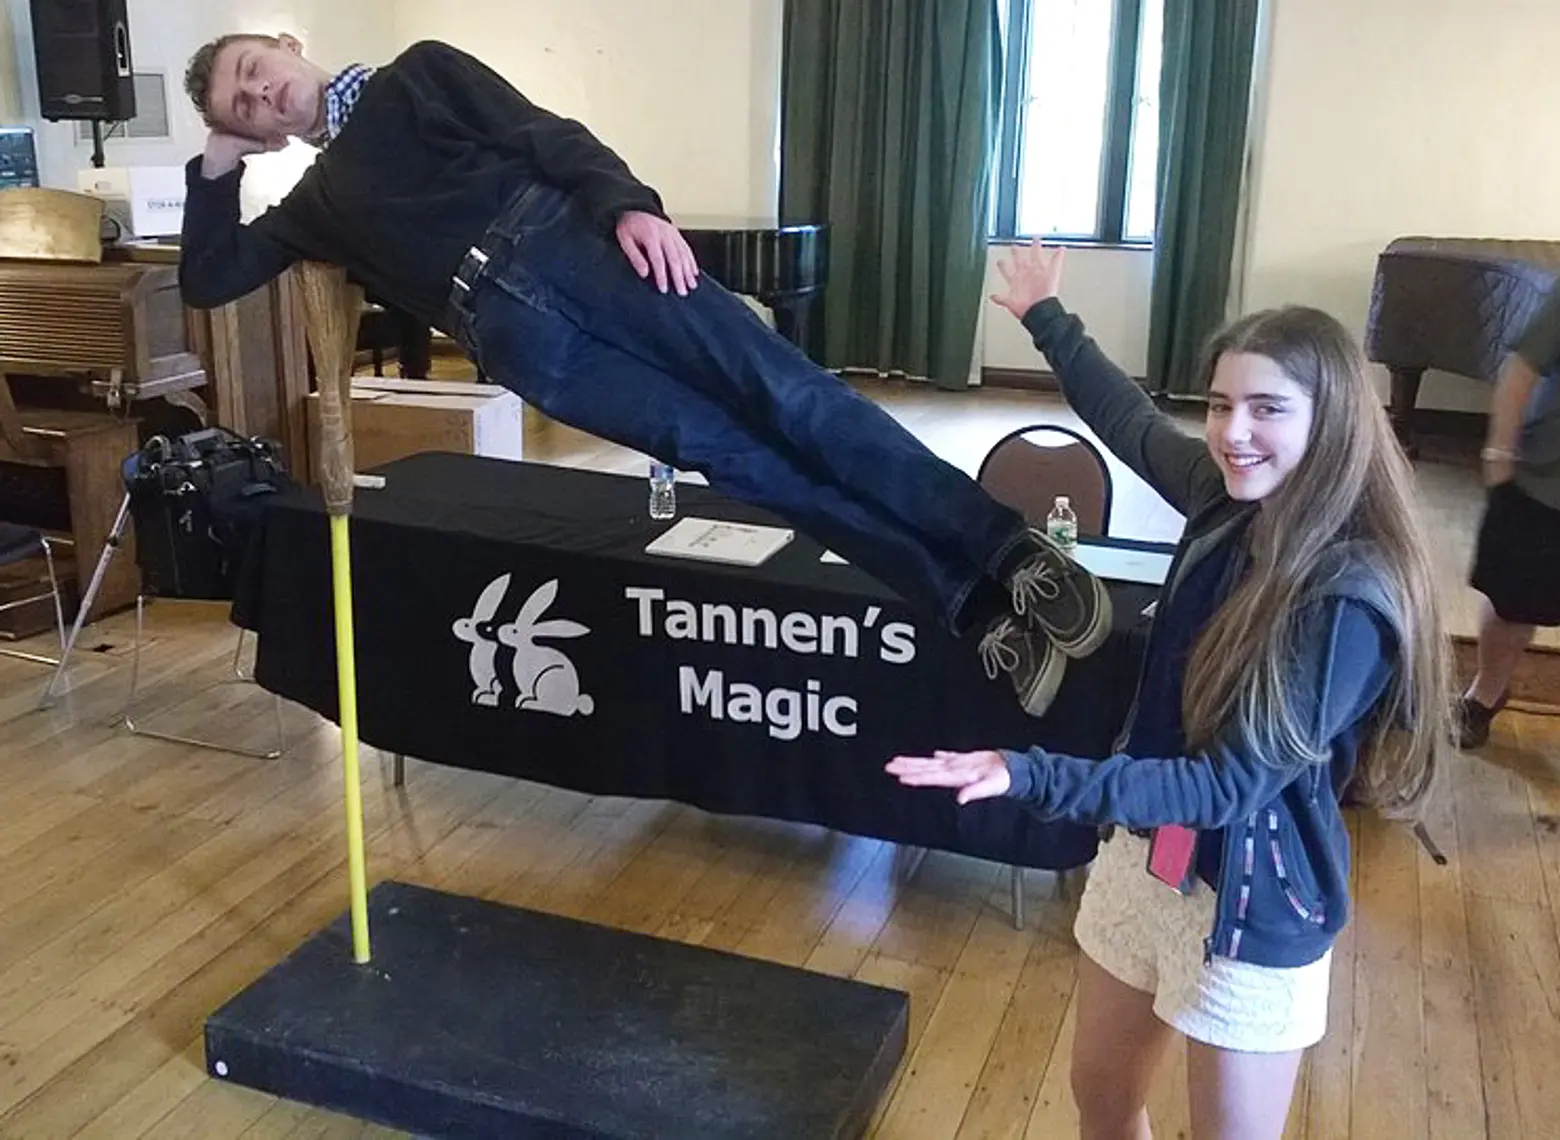 Tannen's Magic Camp, Tannen's Magic, Adam Blumenthal, NYC magic stores